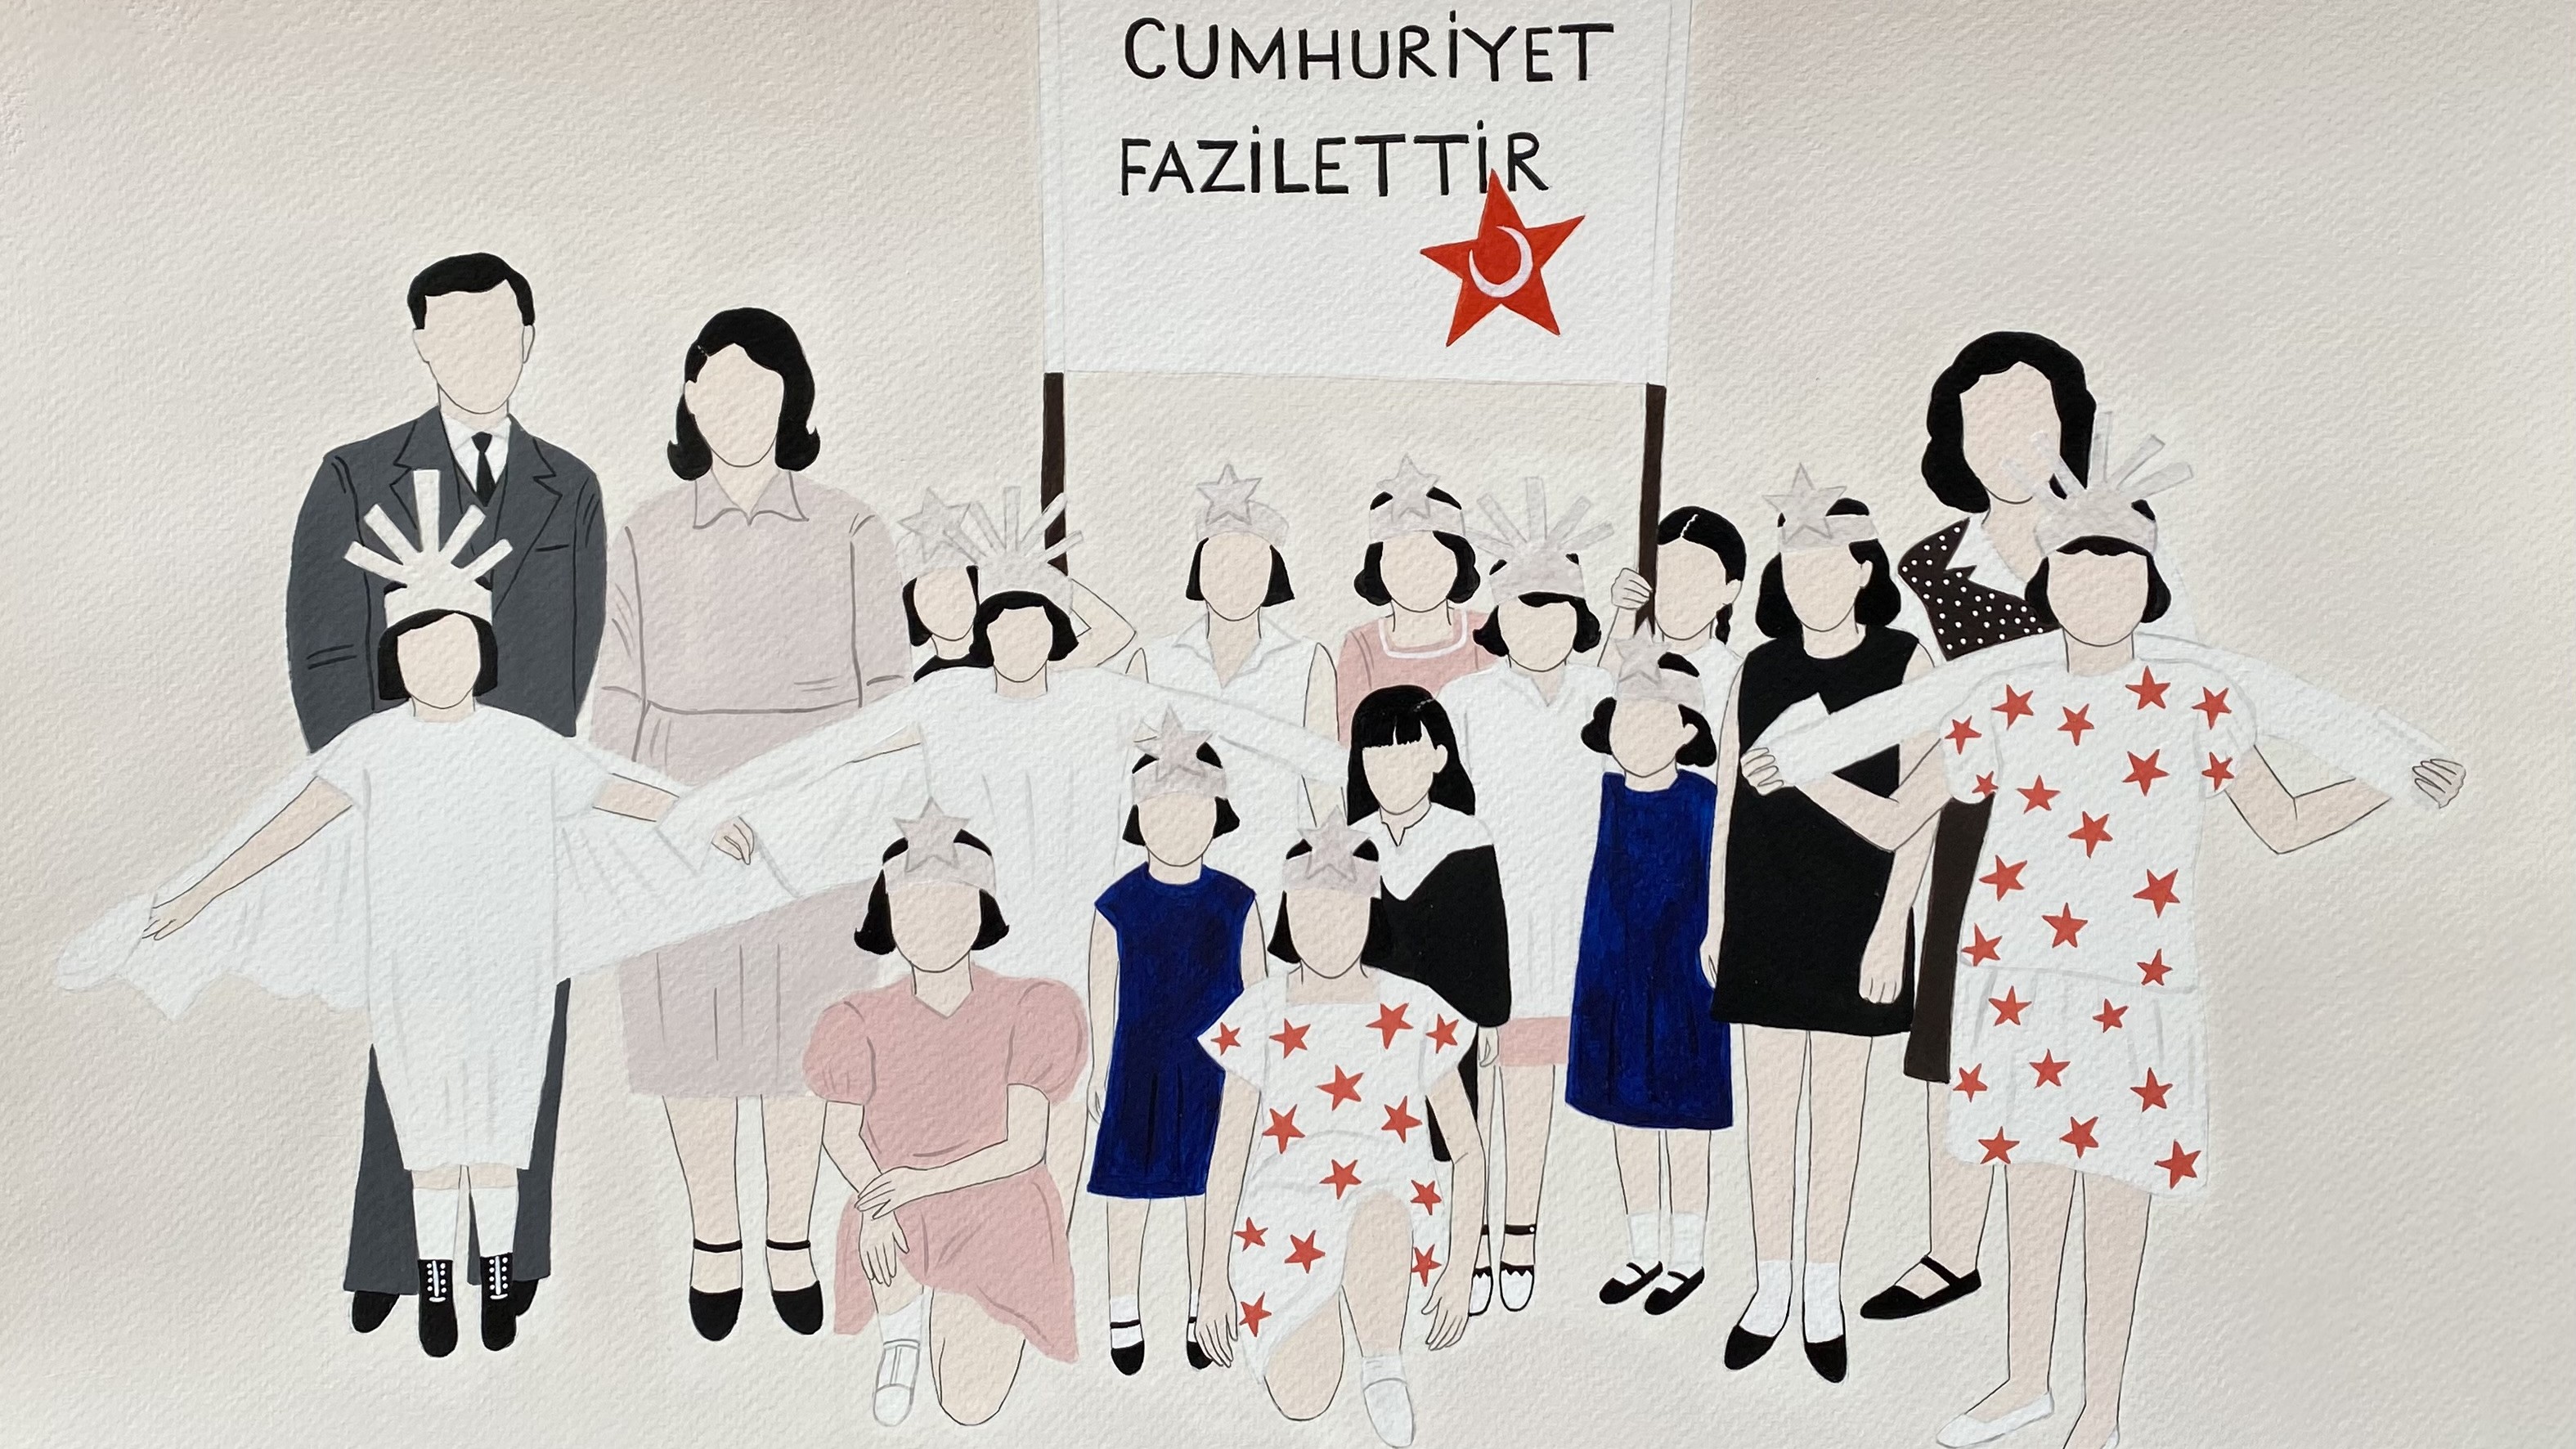 An artwork from Gamze Tasdan's "Cumhuriyet Kizlari" – 'Republic Girls', showing a group of faceless individuals, mostly women and girls